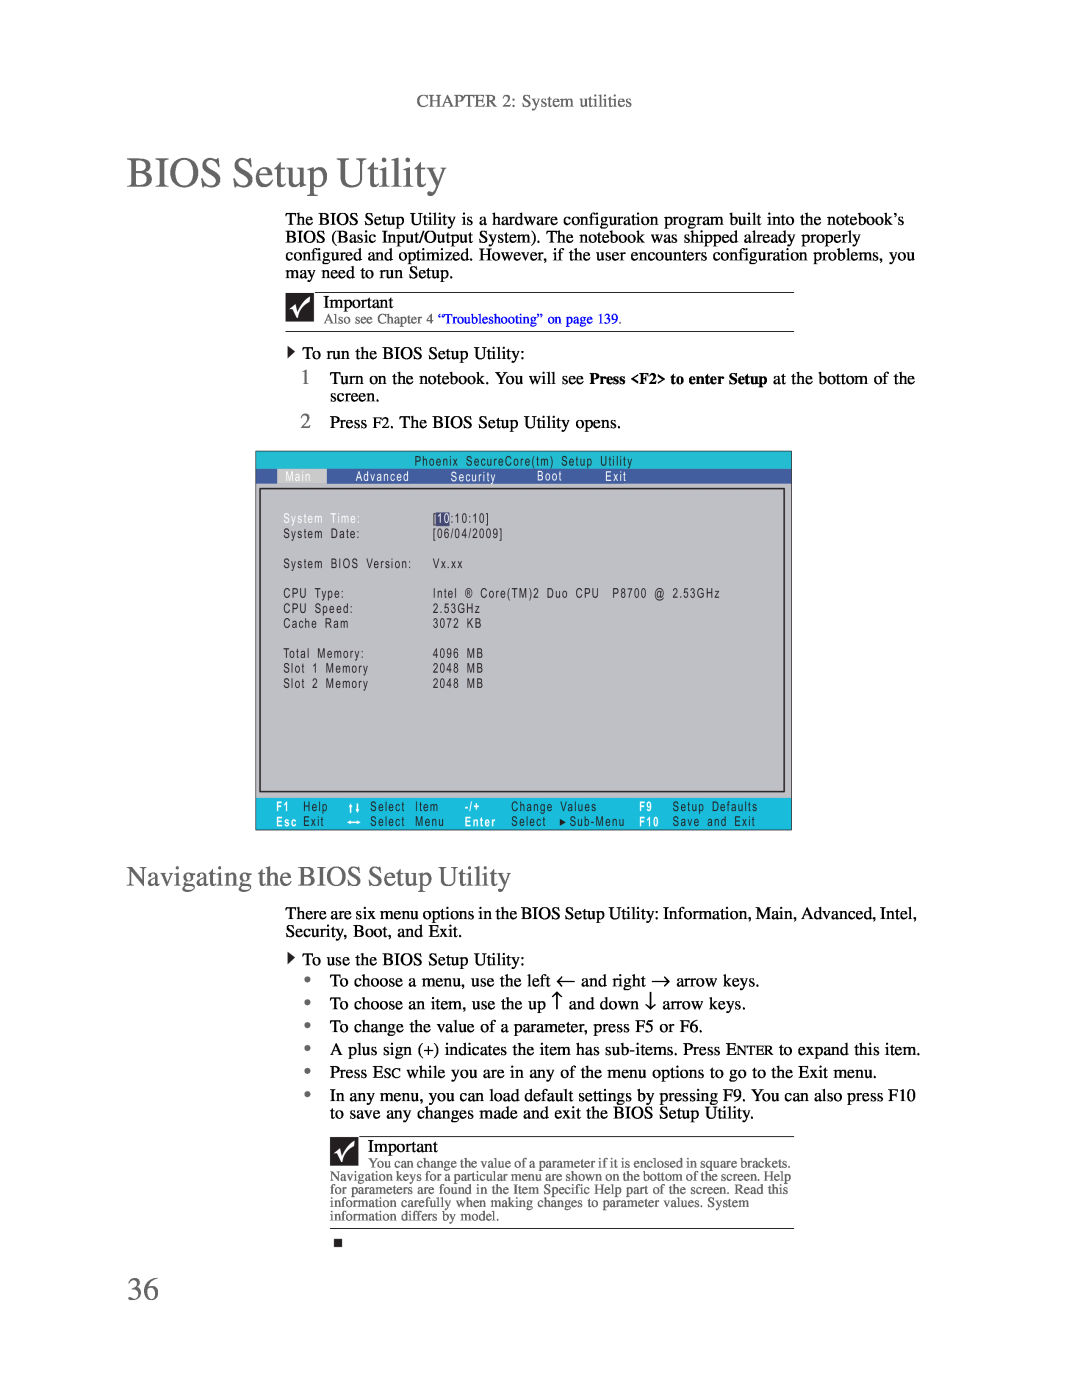 Gateway p-79 manual Navigating the BIOS Setup Utility, System utilities 